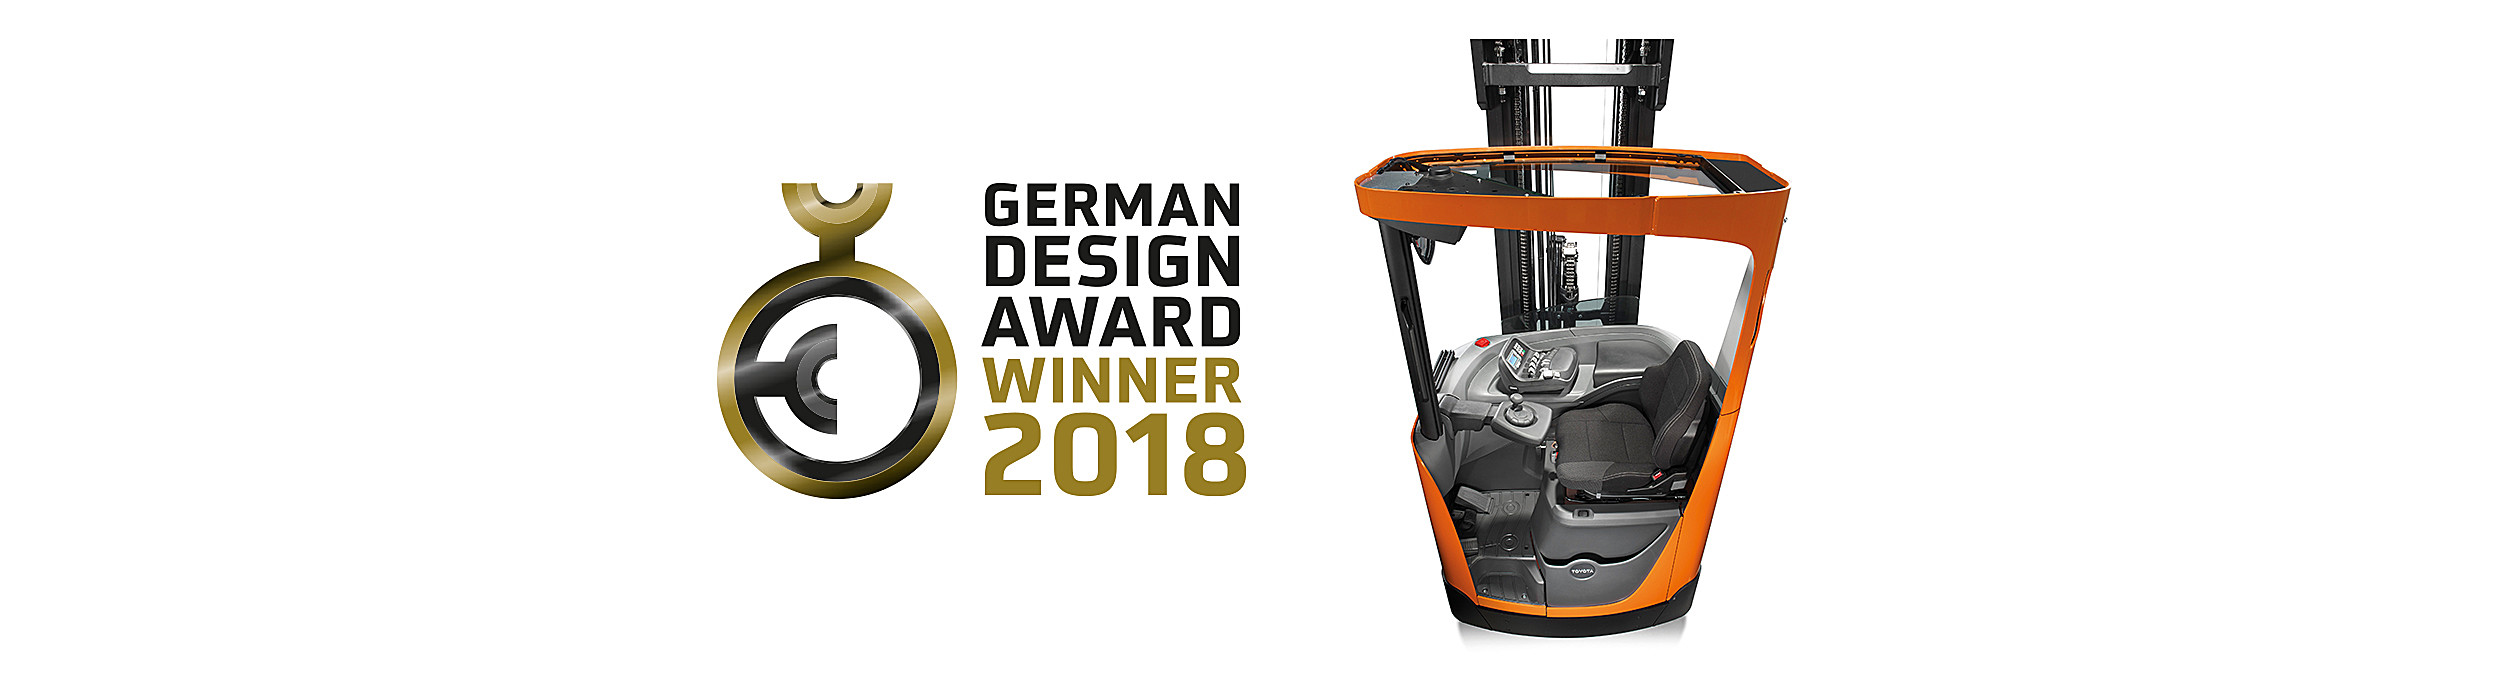 German Design Award Winner 2018 Toyota BT Reflex reach truck